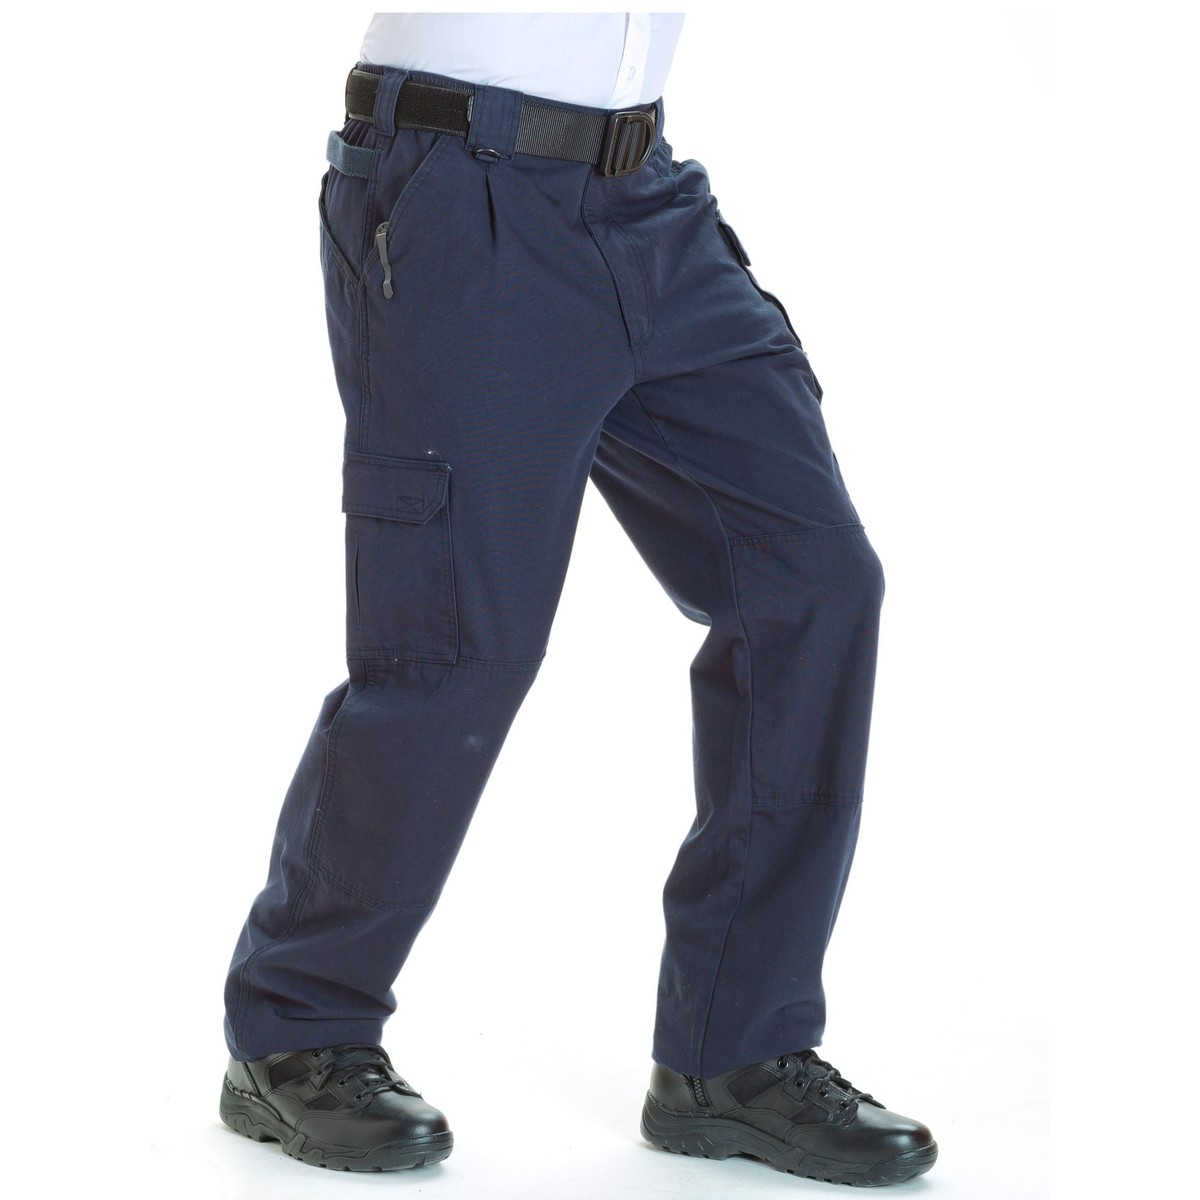 Outdoor Tactical | 5.11 Tactical Pants